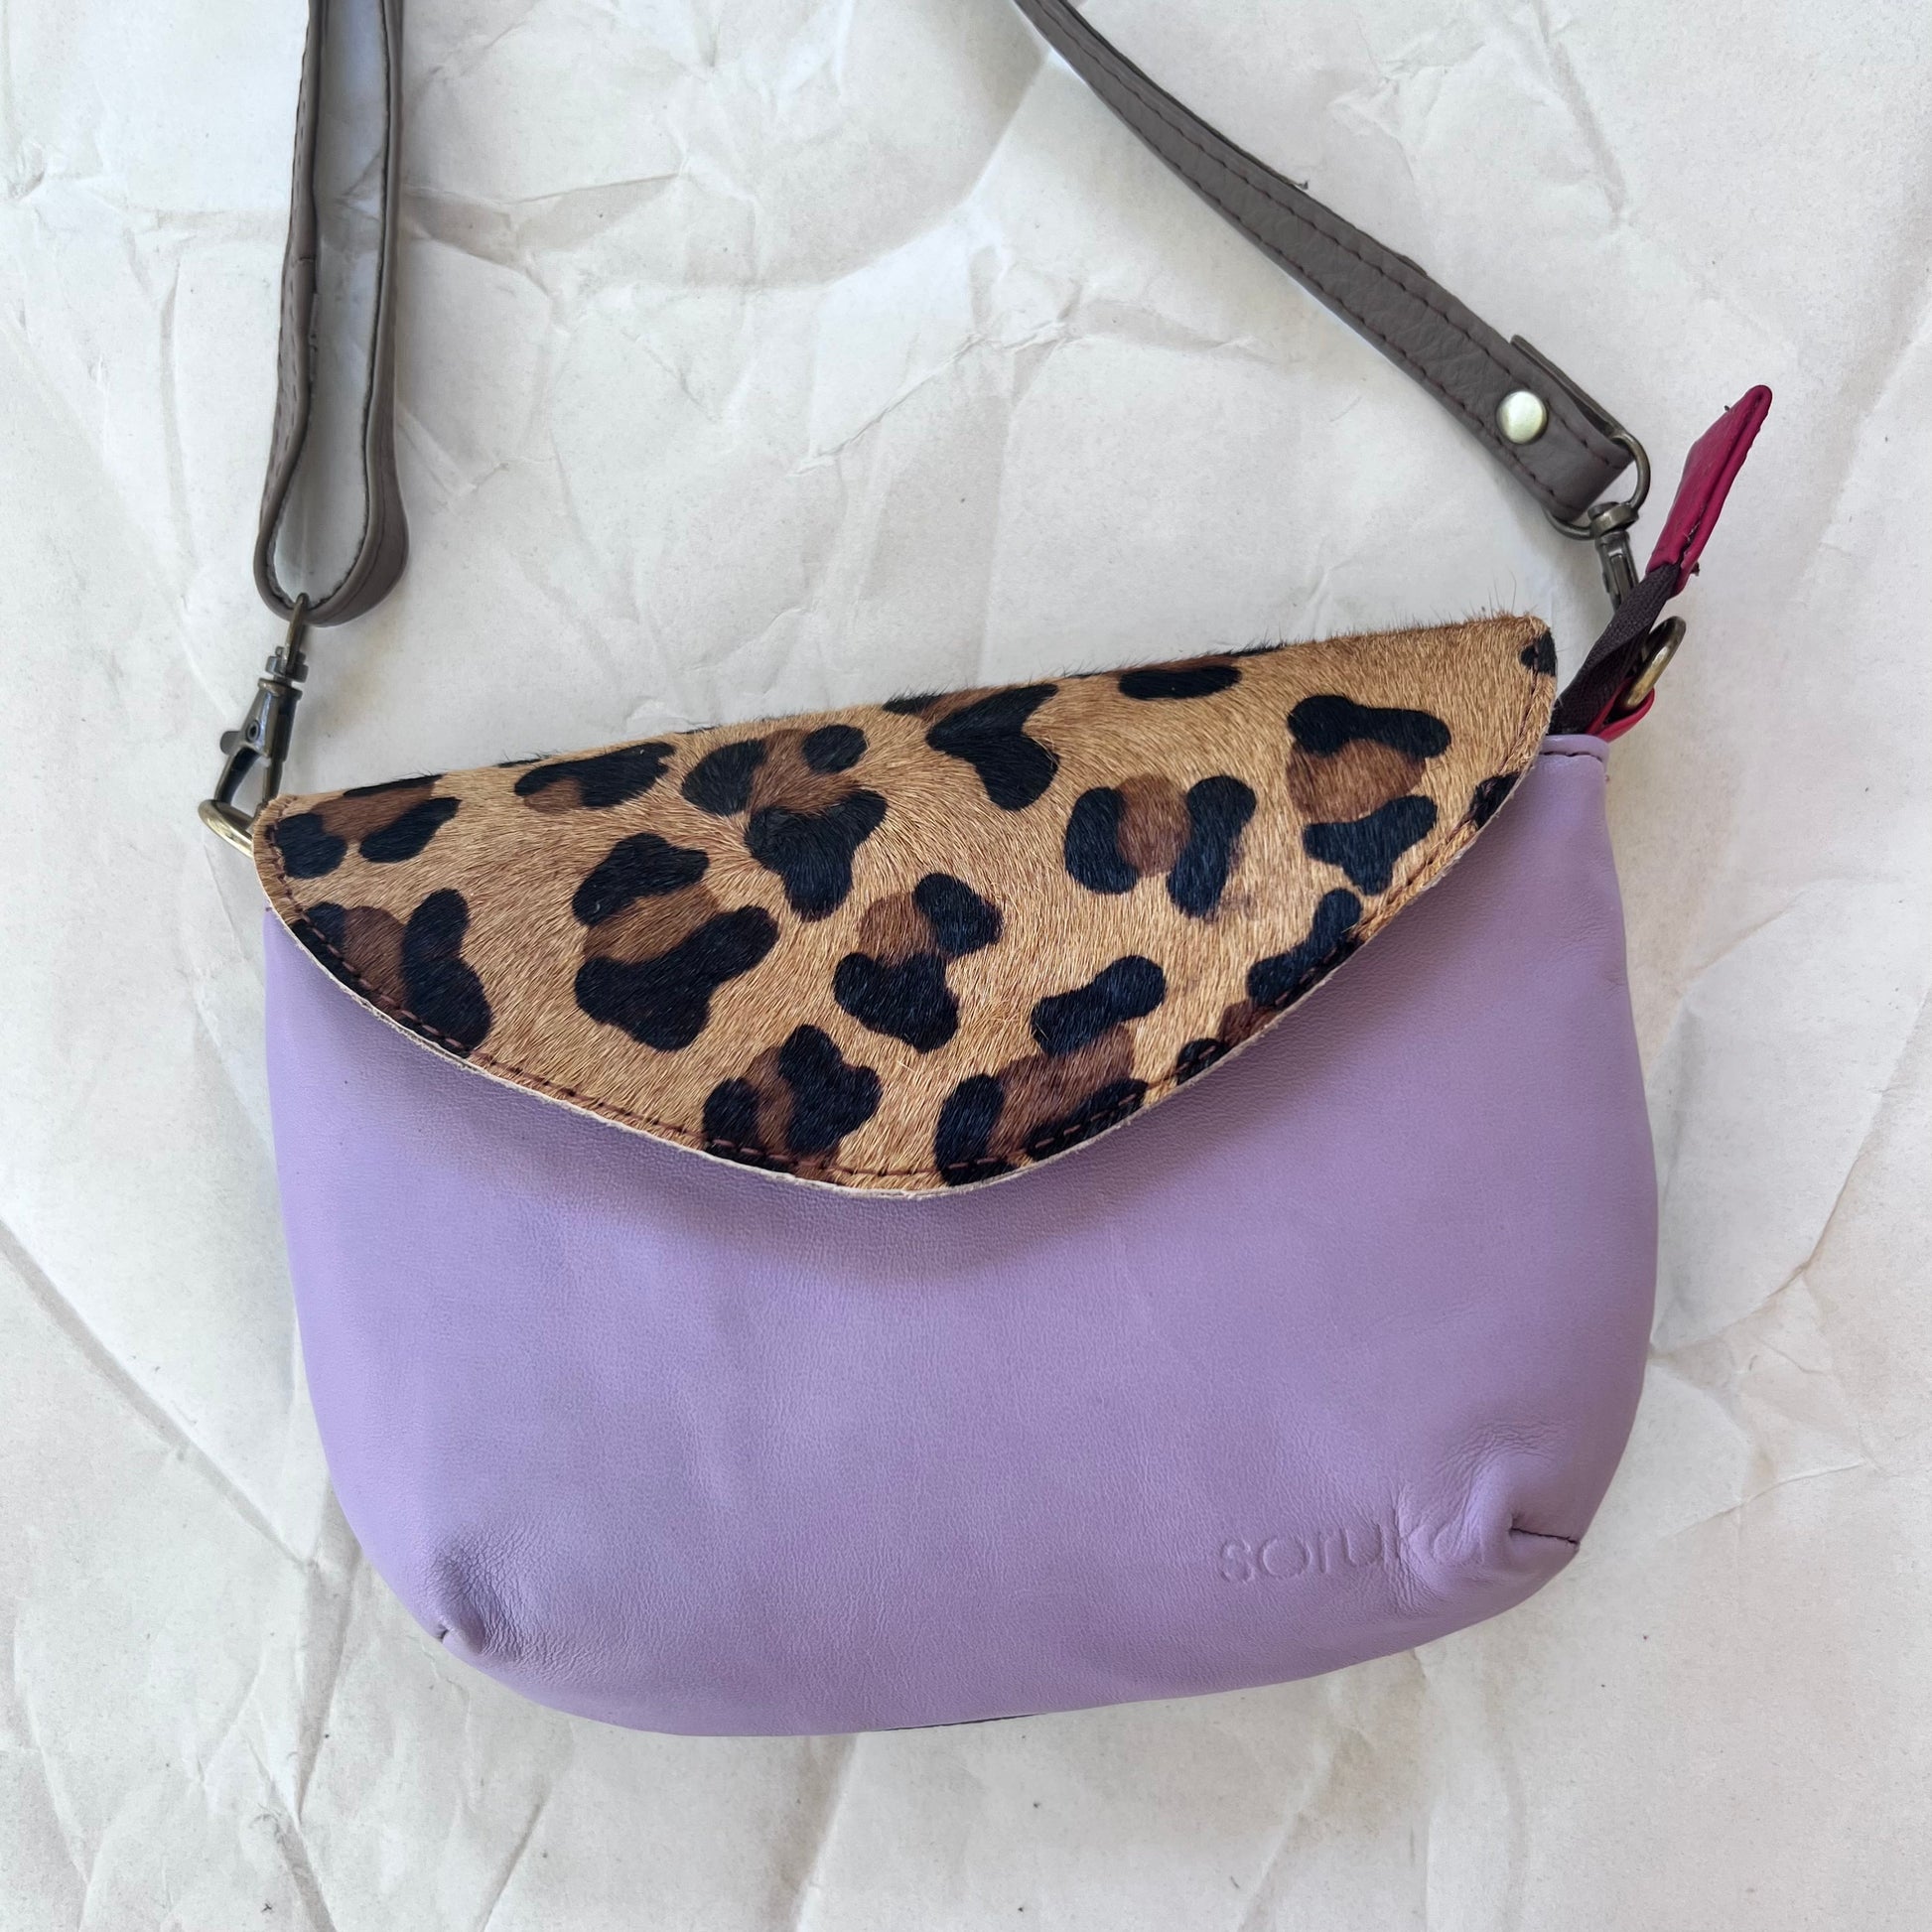 small lavender carol bag with cheetah print flap and grey shoulder strap.